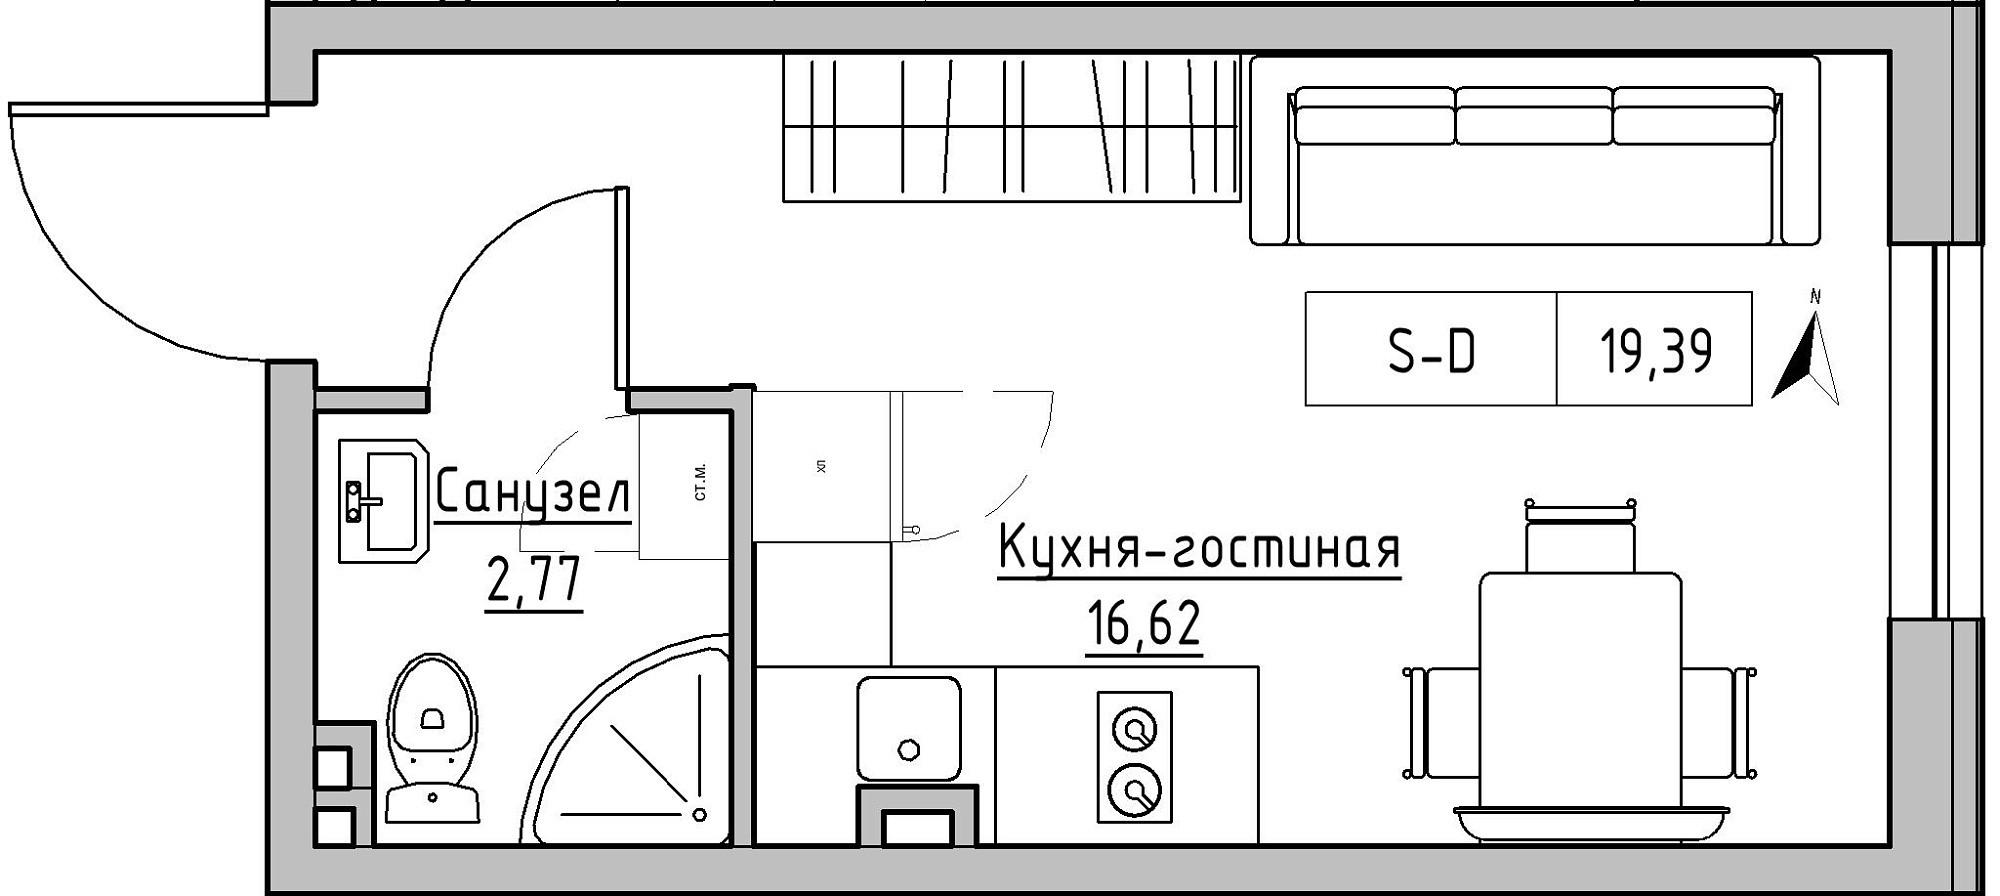 Планировка Smart-квартира площей 19.39м2, KS-024-01/0014.